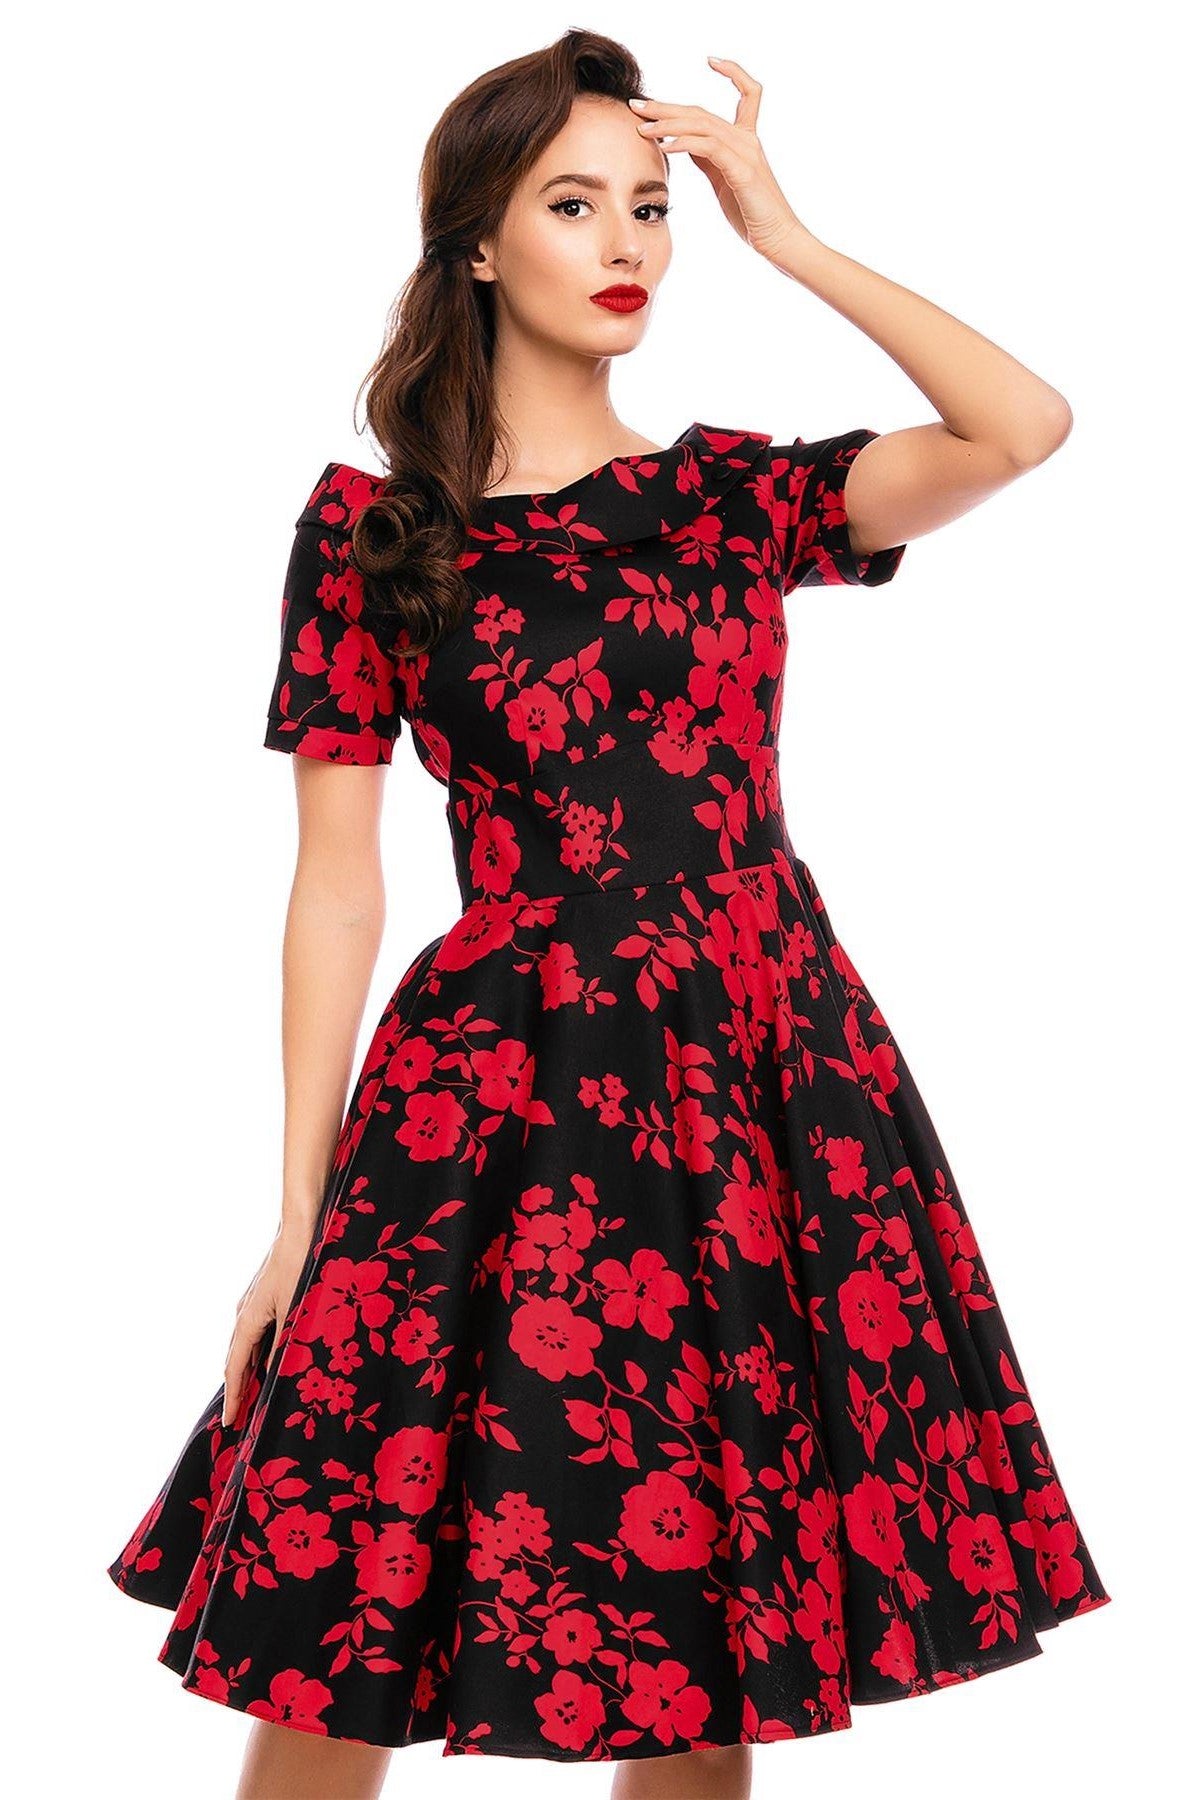 Model wearing our bateau neckline Darlene dress, in black/red floral print, close up view